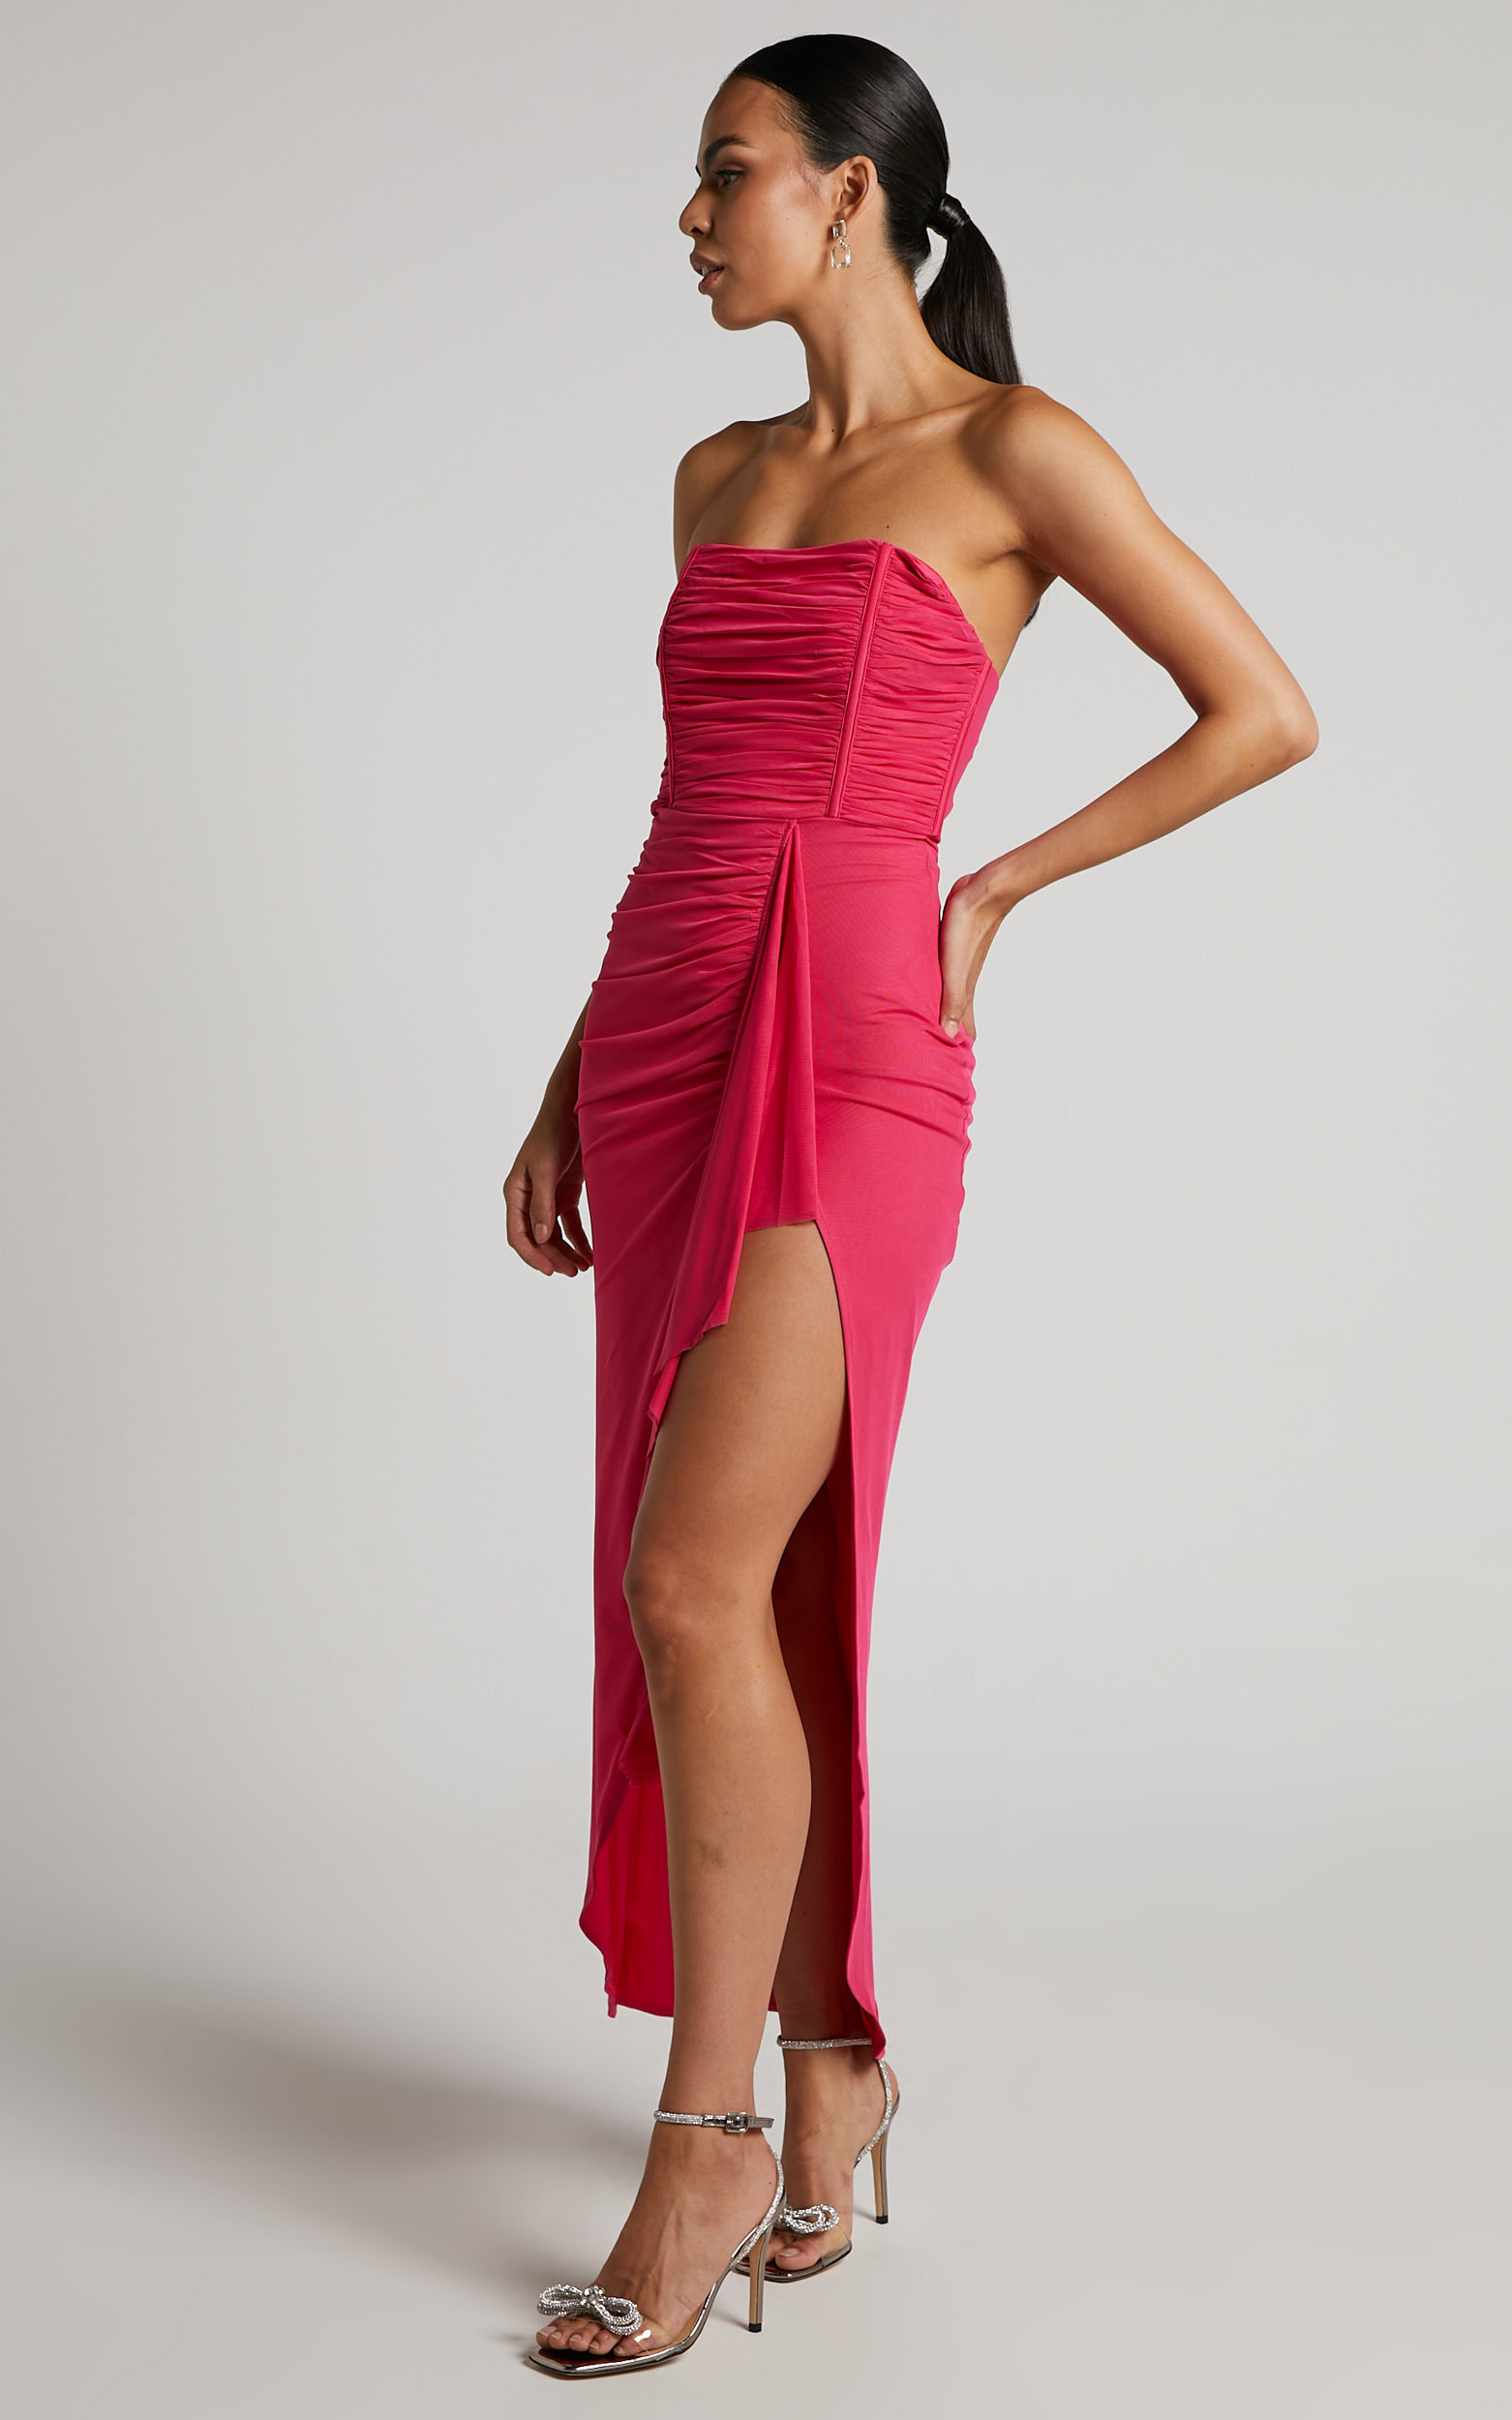 Nora Corset Detailing Dress in Hot Pink | Showpo USA